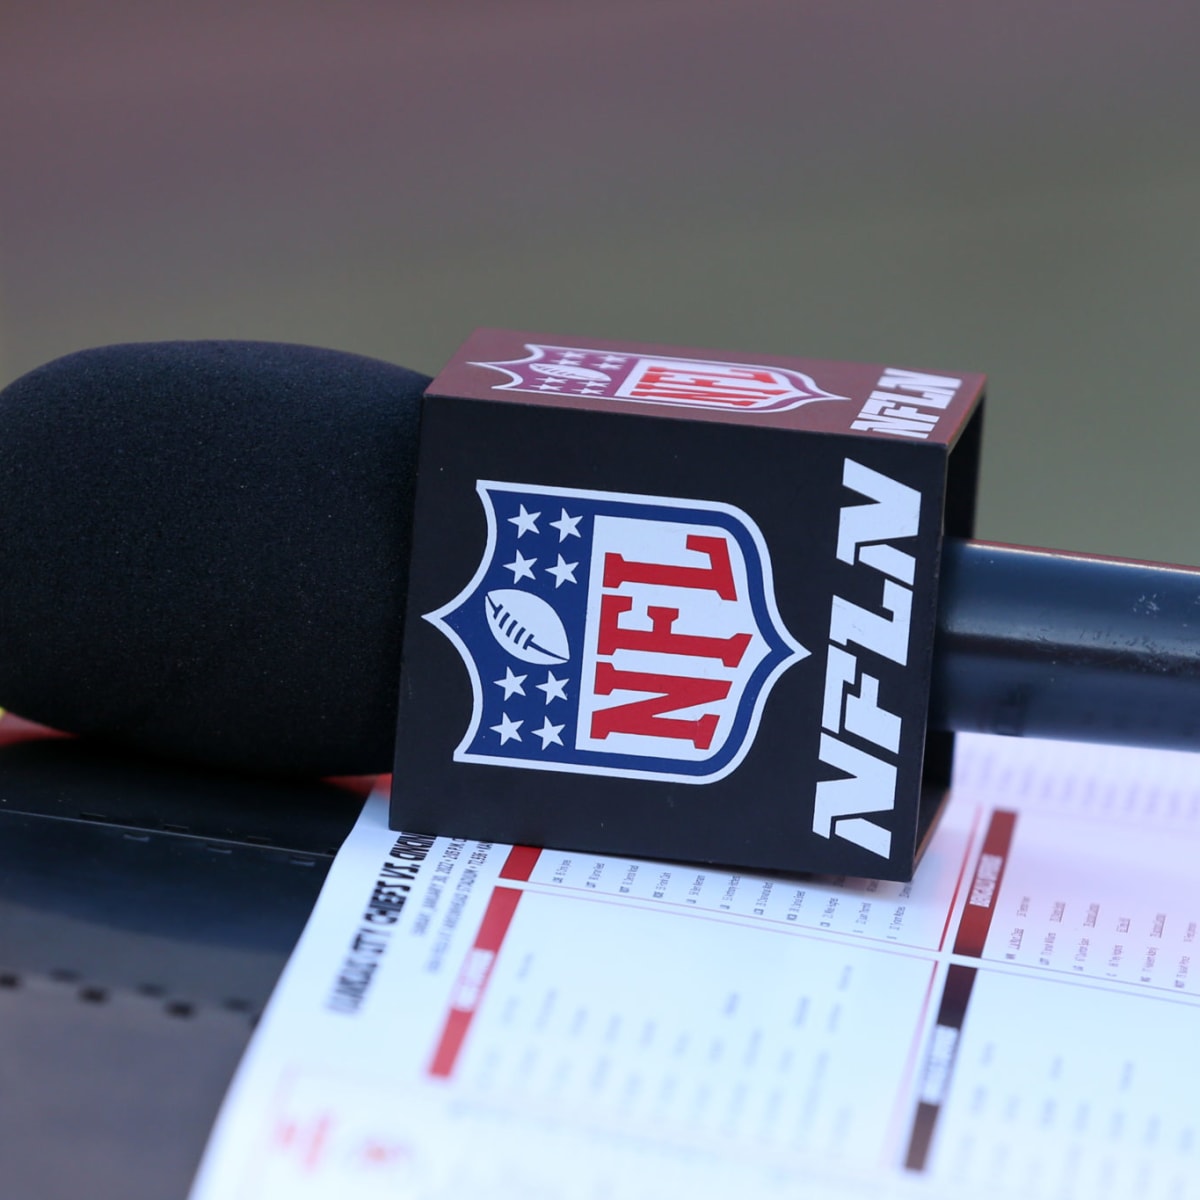 NFL Network - Congrats, Kyle Brandt ! We cannot wait for your